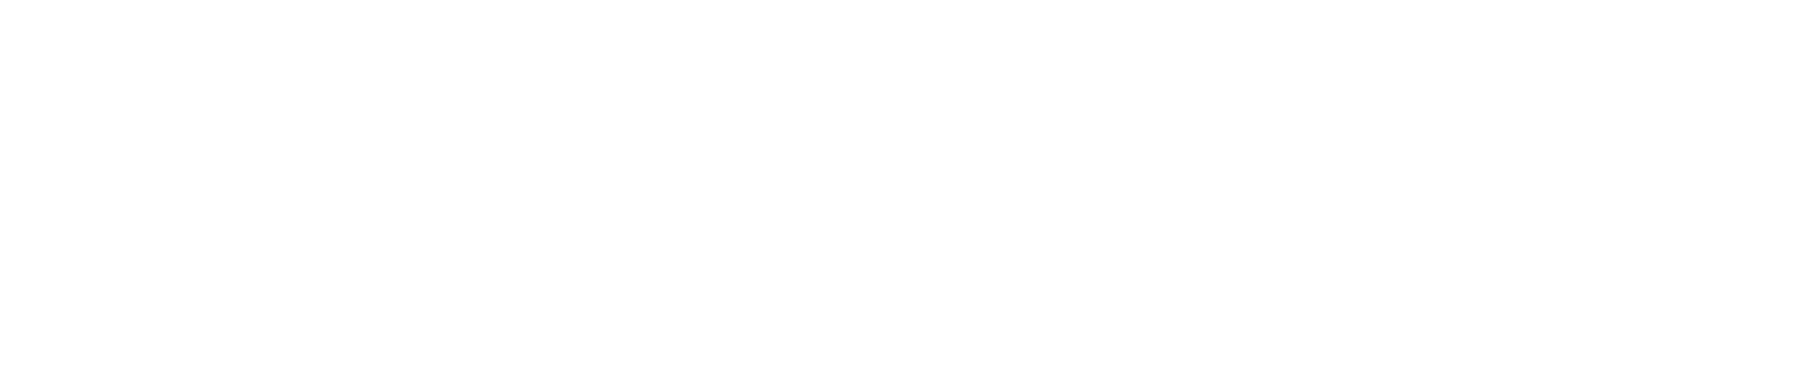 Logo ManpowerGroup Solutions